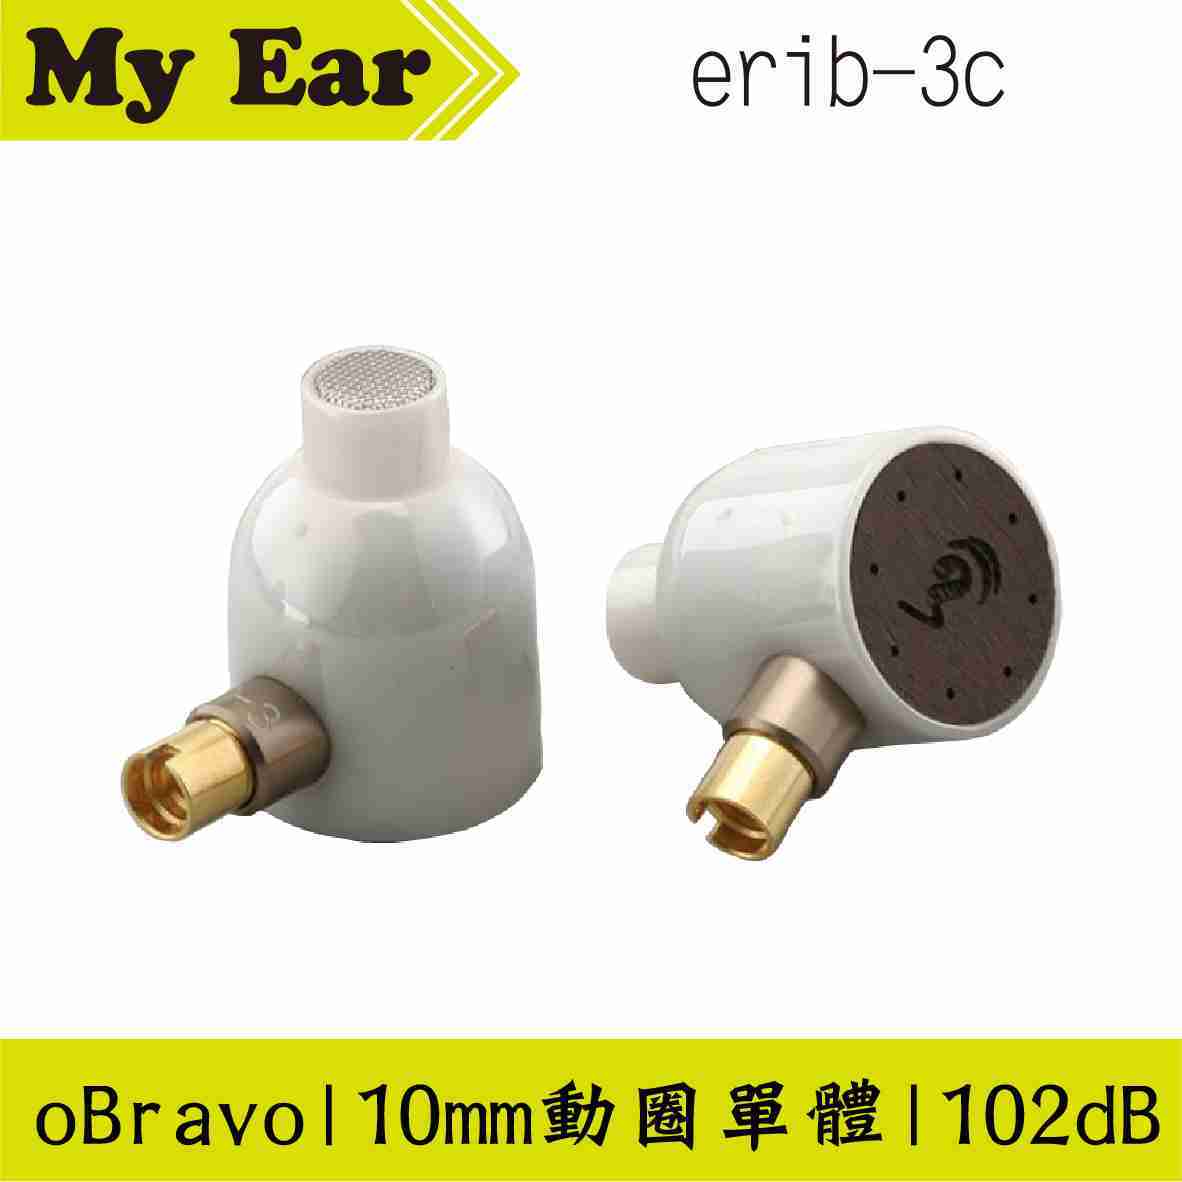 oBravo erib-3c 平面振膜 耳道式耳機 | My Ear耳機專門店